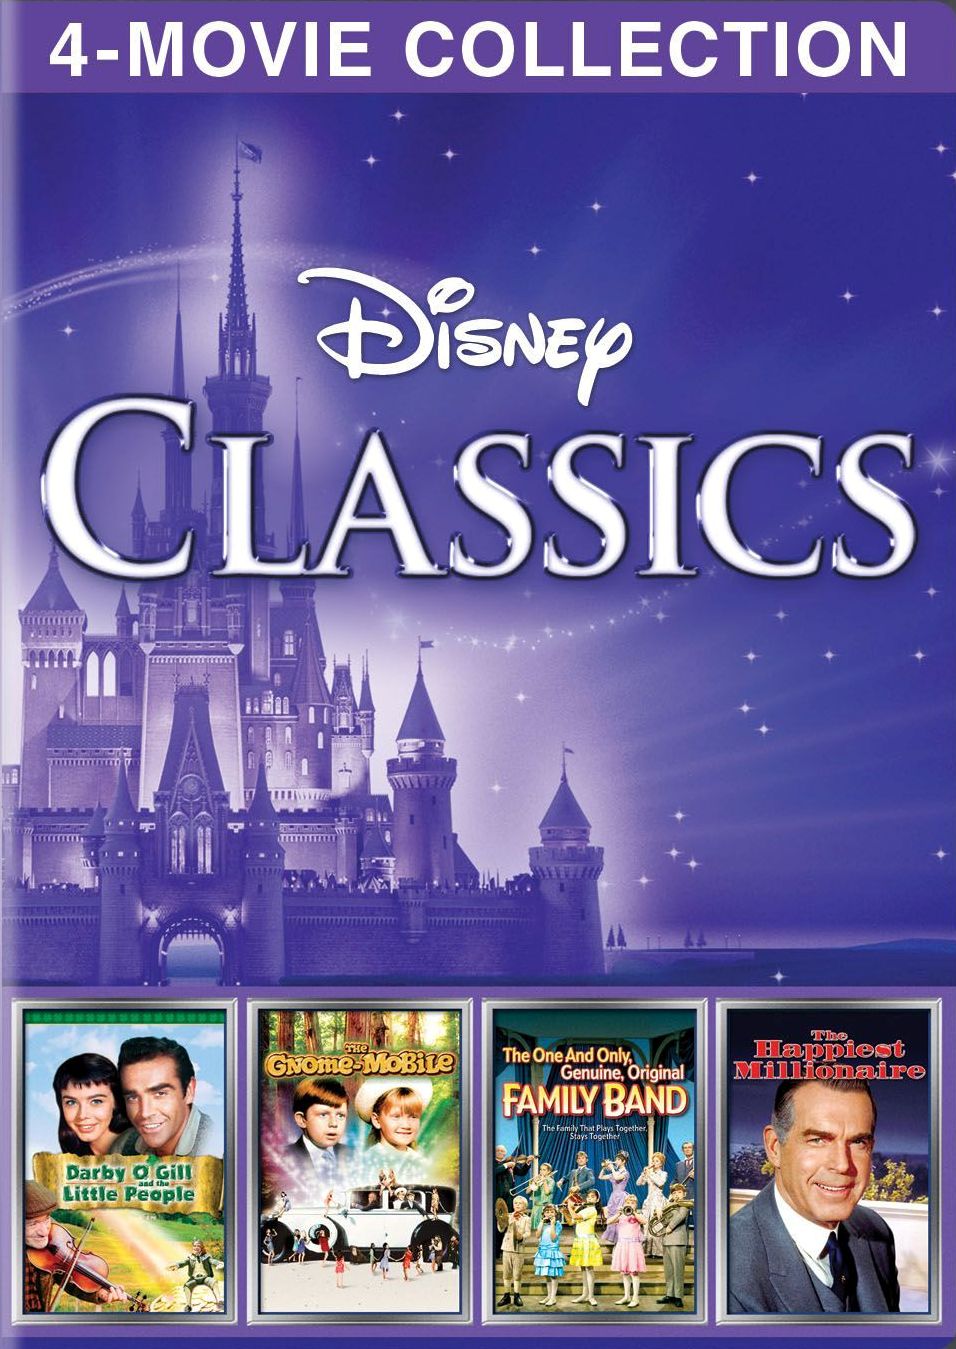 Disney Classics 4 Movie Collection 4 Discs Dvd Best Buy